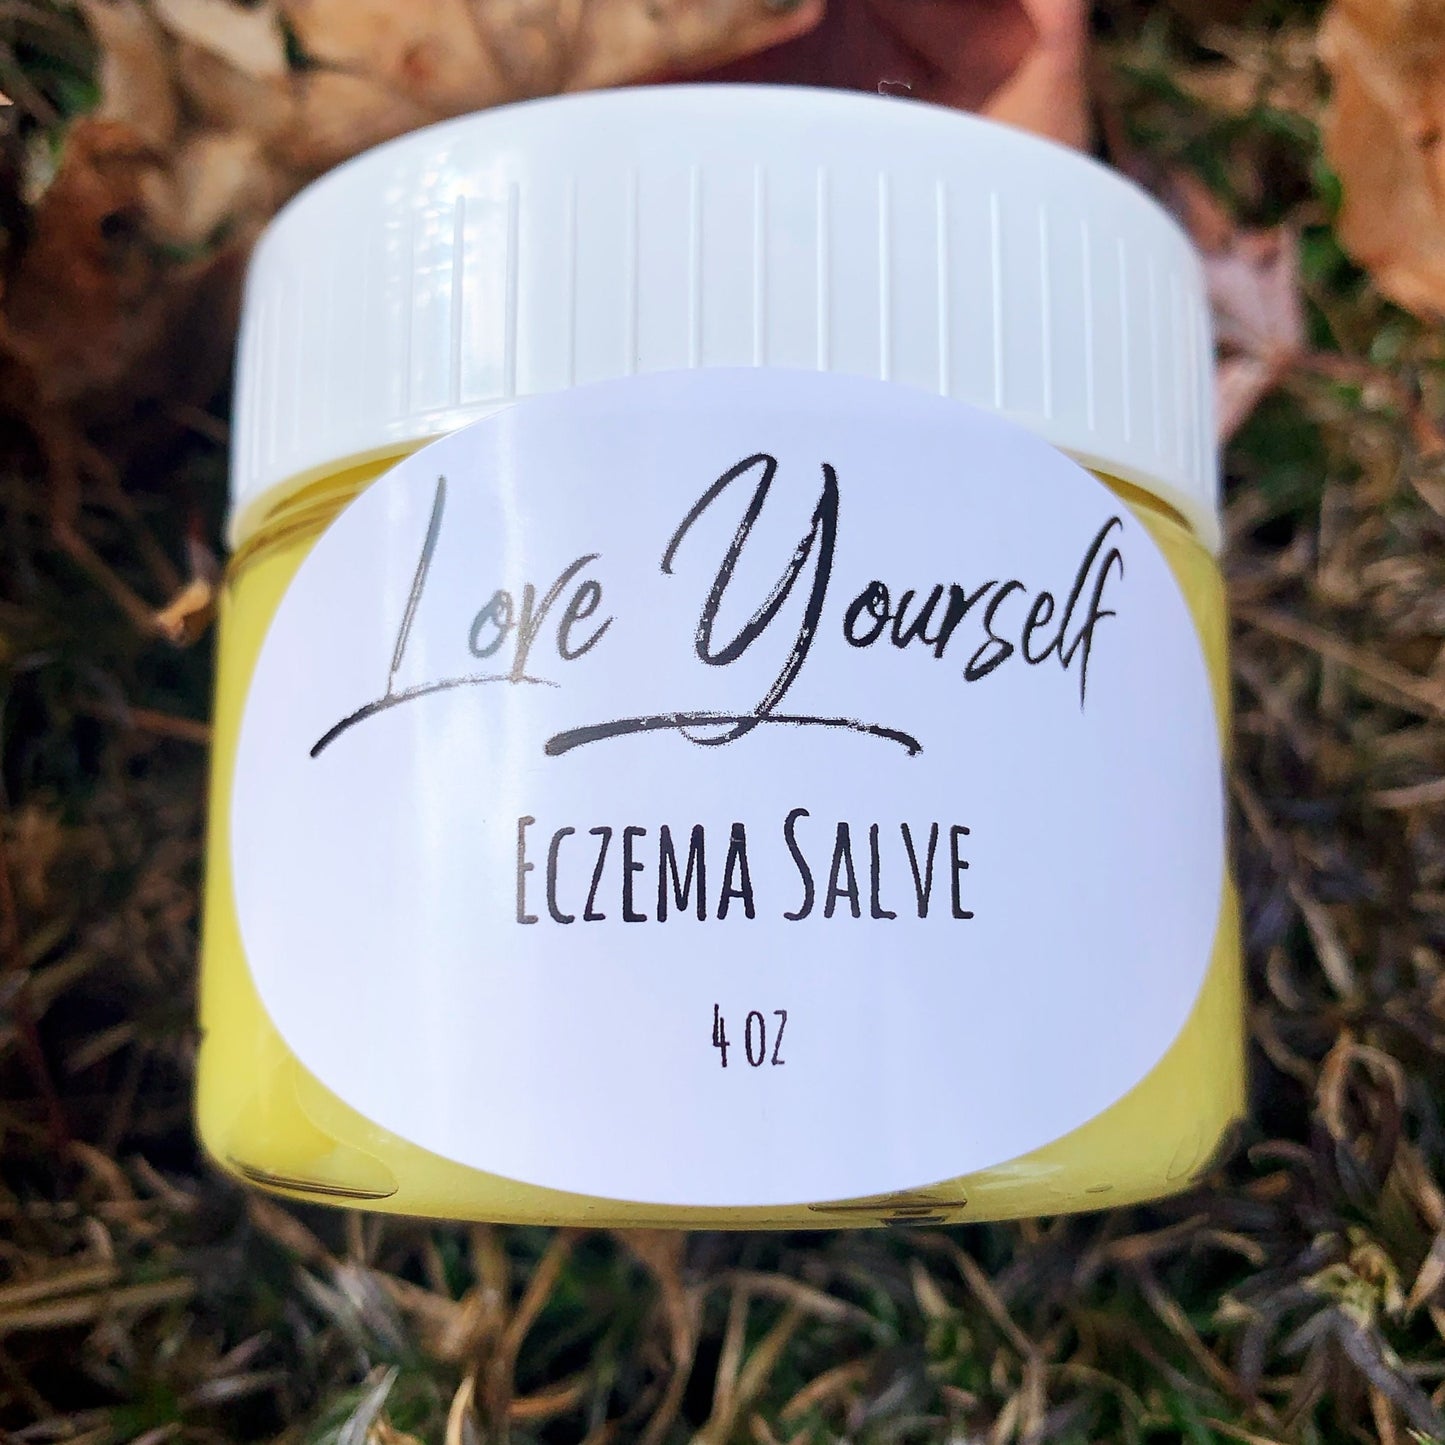 Eczema Salve by Love Yourself